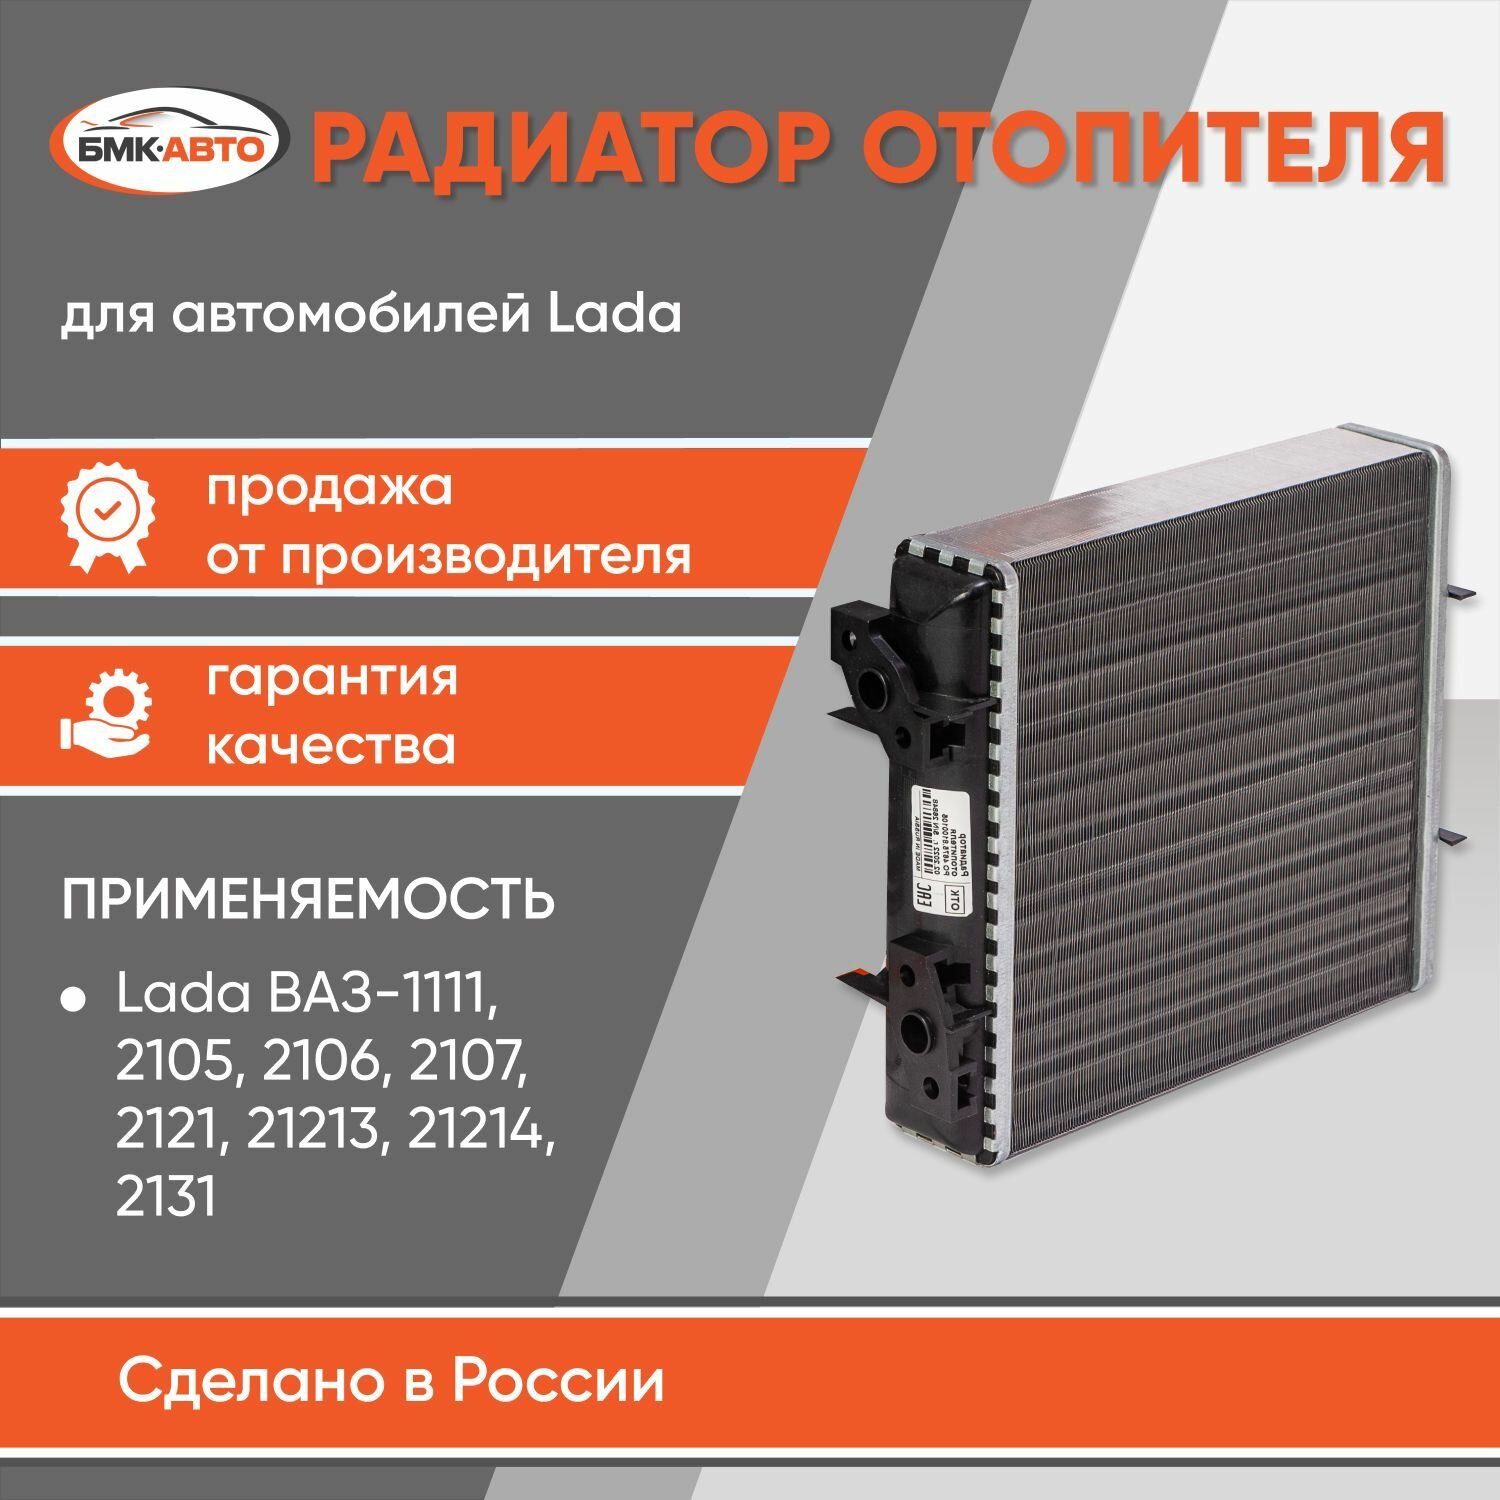 Радиатор отопителя (печки) ВАЗ 2101-07, 2121 н/о (широкий) бмк-авто